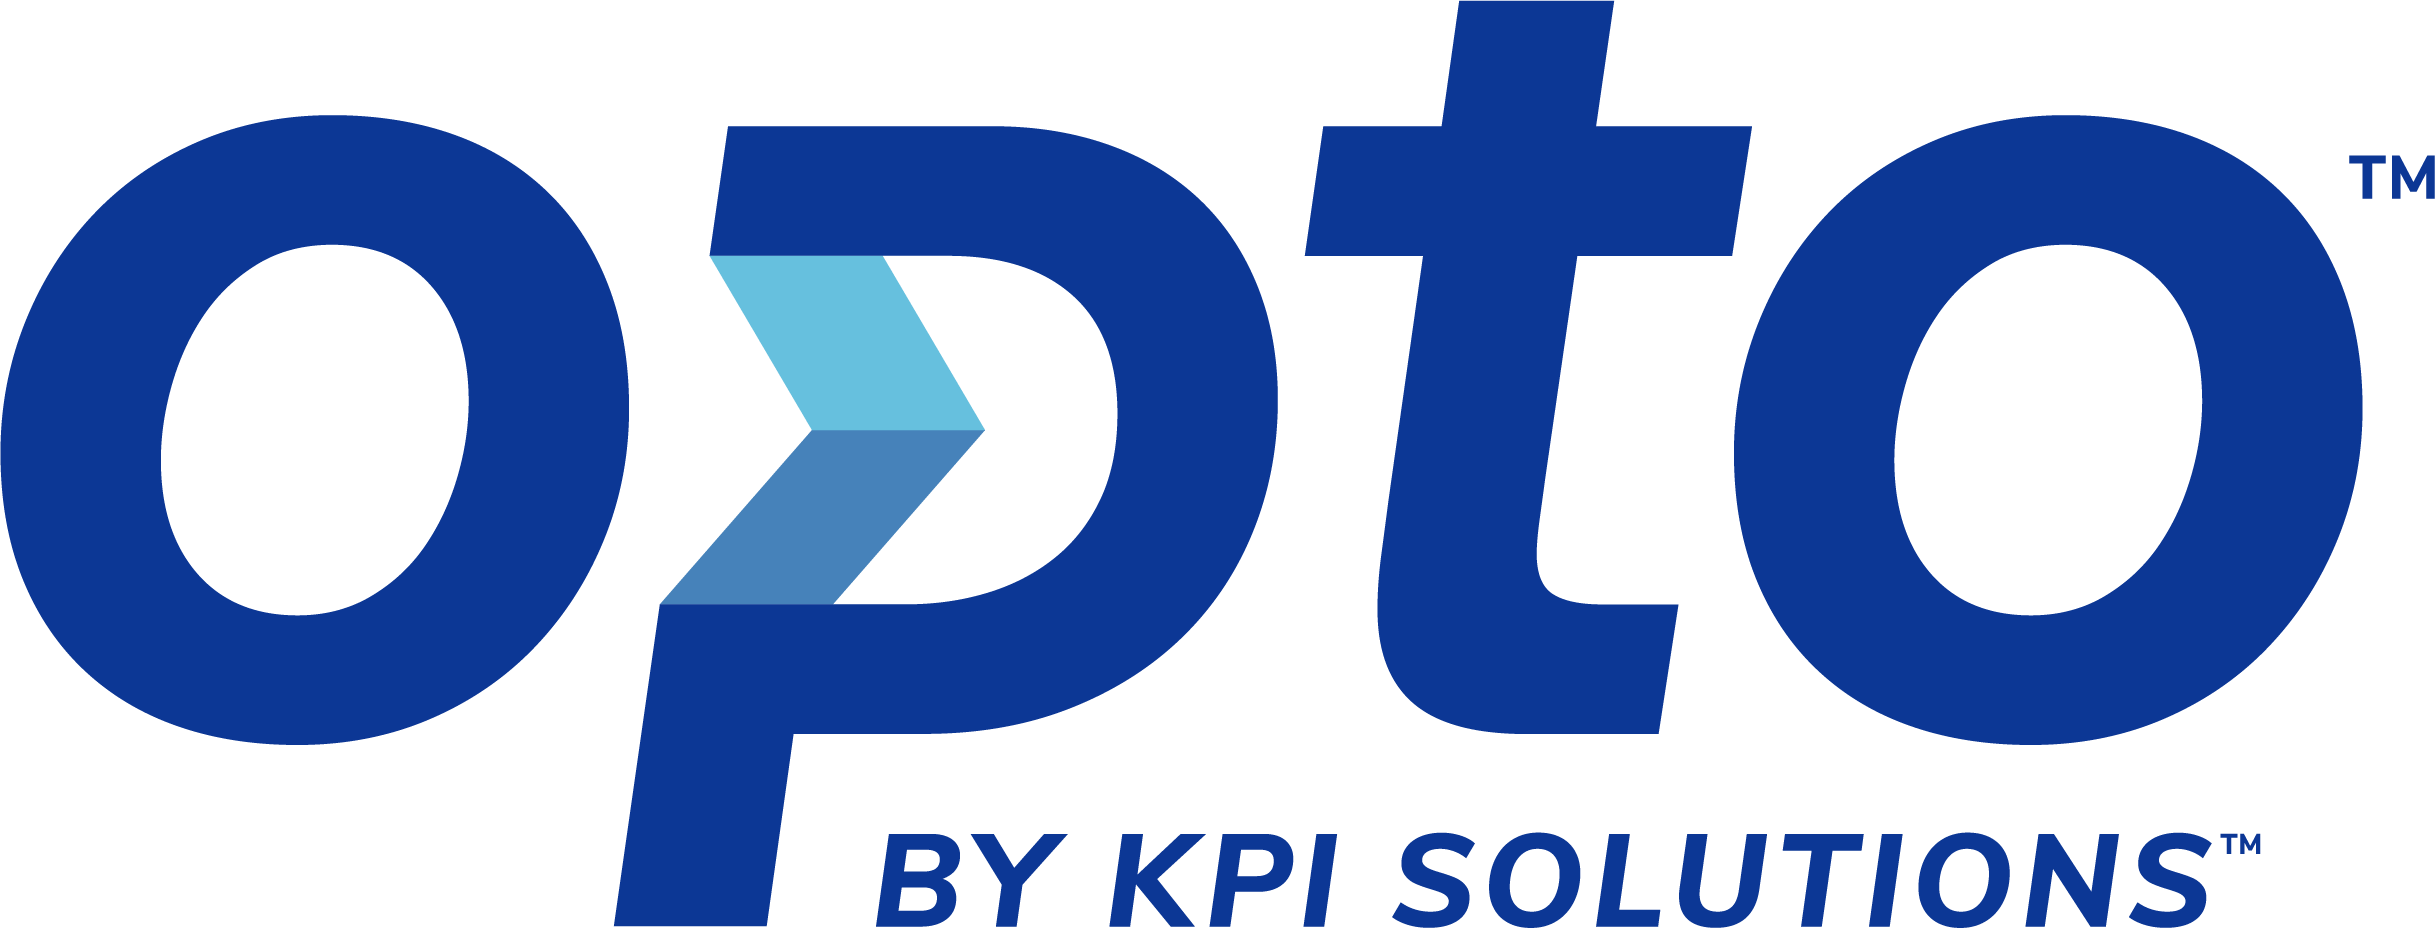 KPI Solutions Opto Software